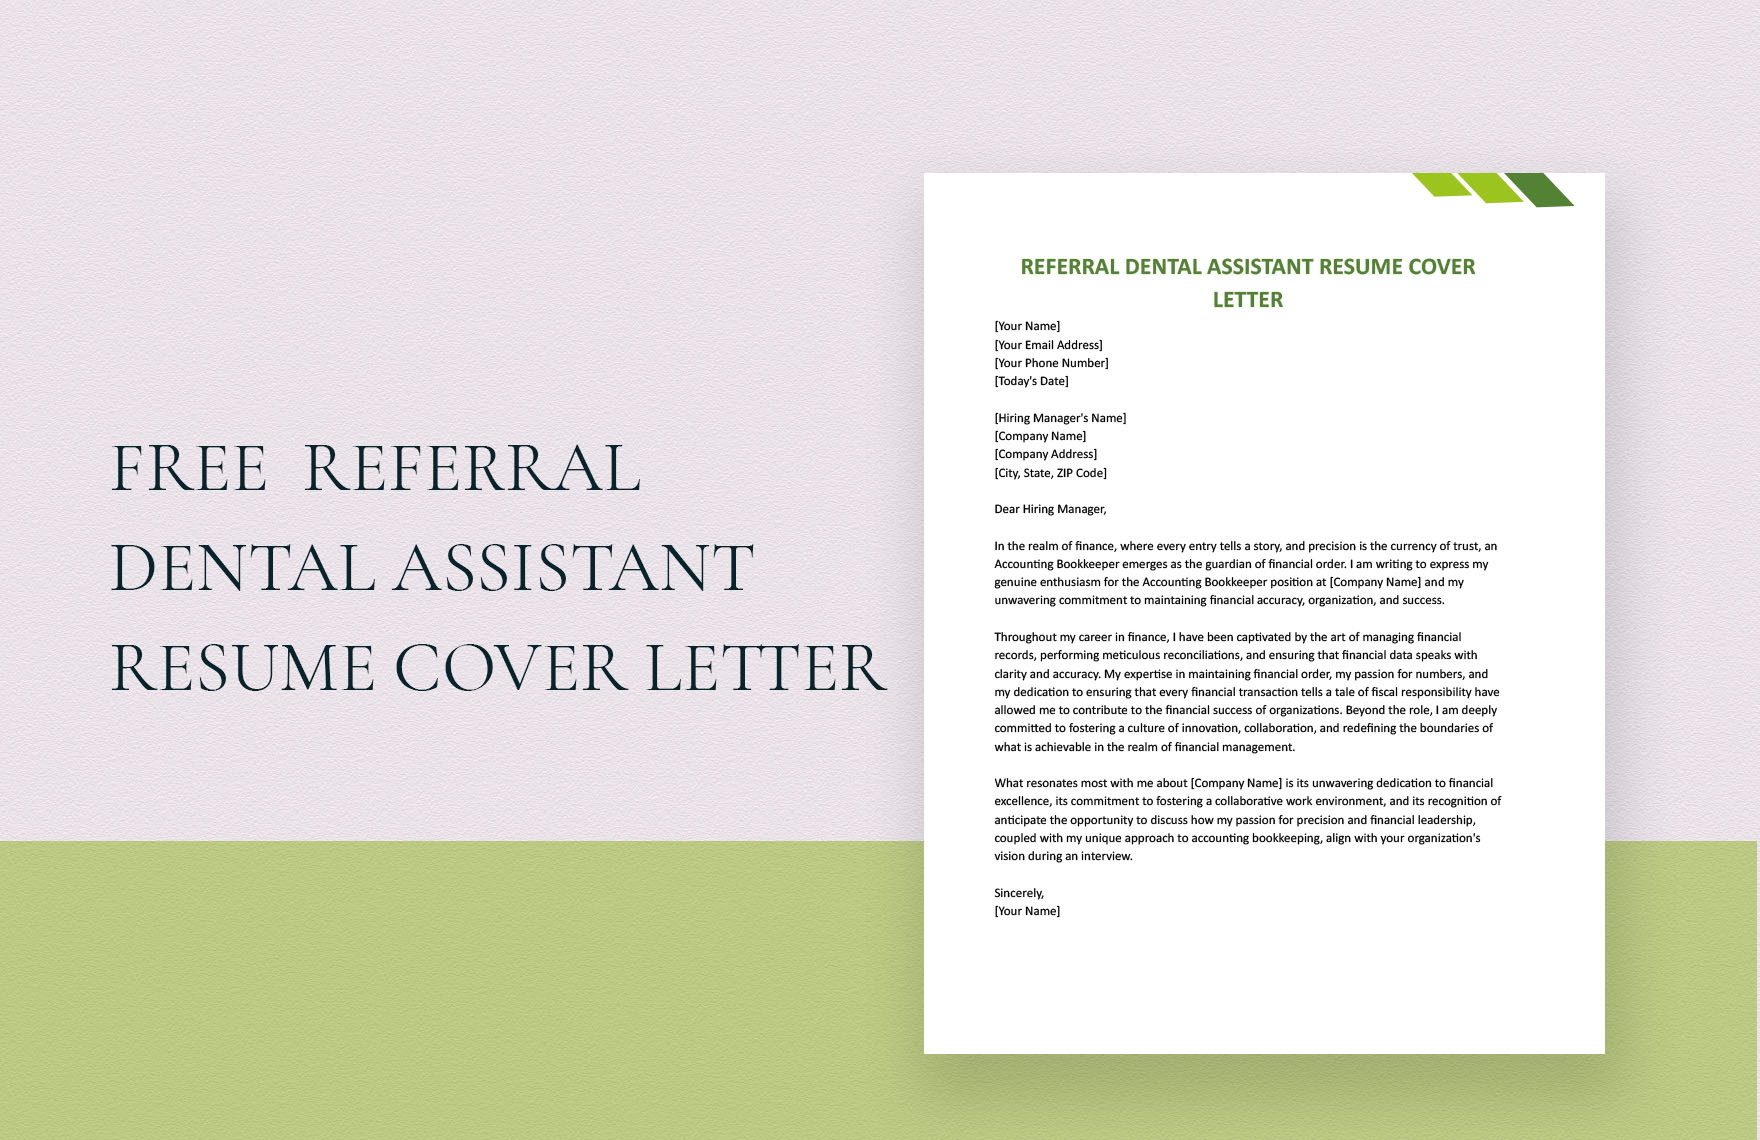 Referral Dental Assistant Resume Cover Letter Template